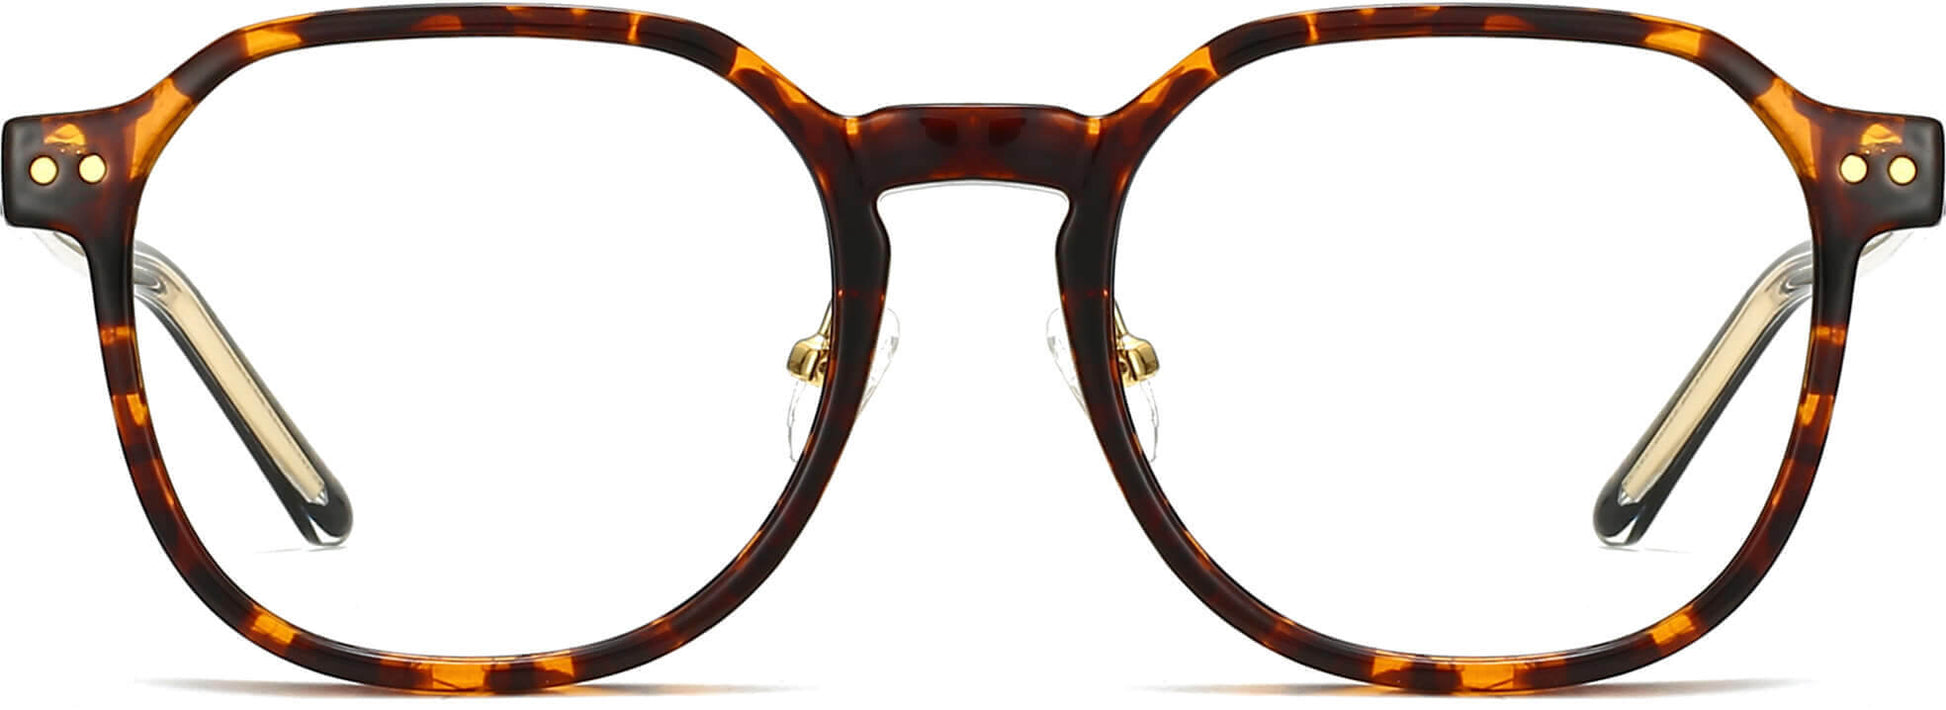 Rebecca Geometric Tortoise Eyeglasses from ANRRI, front view